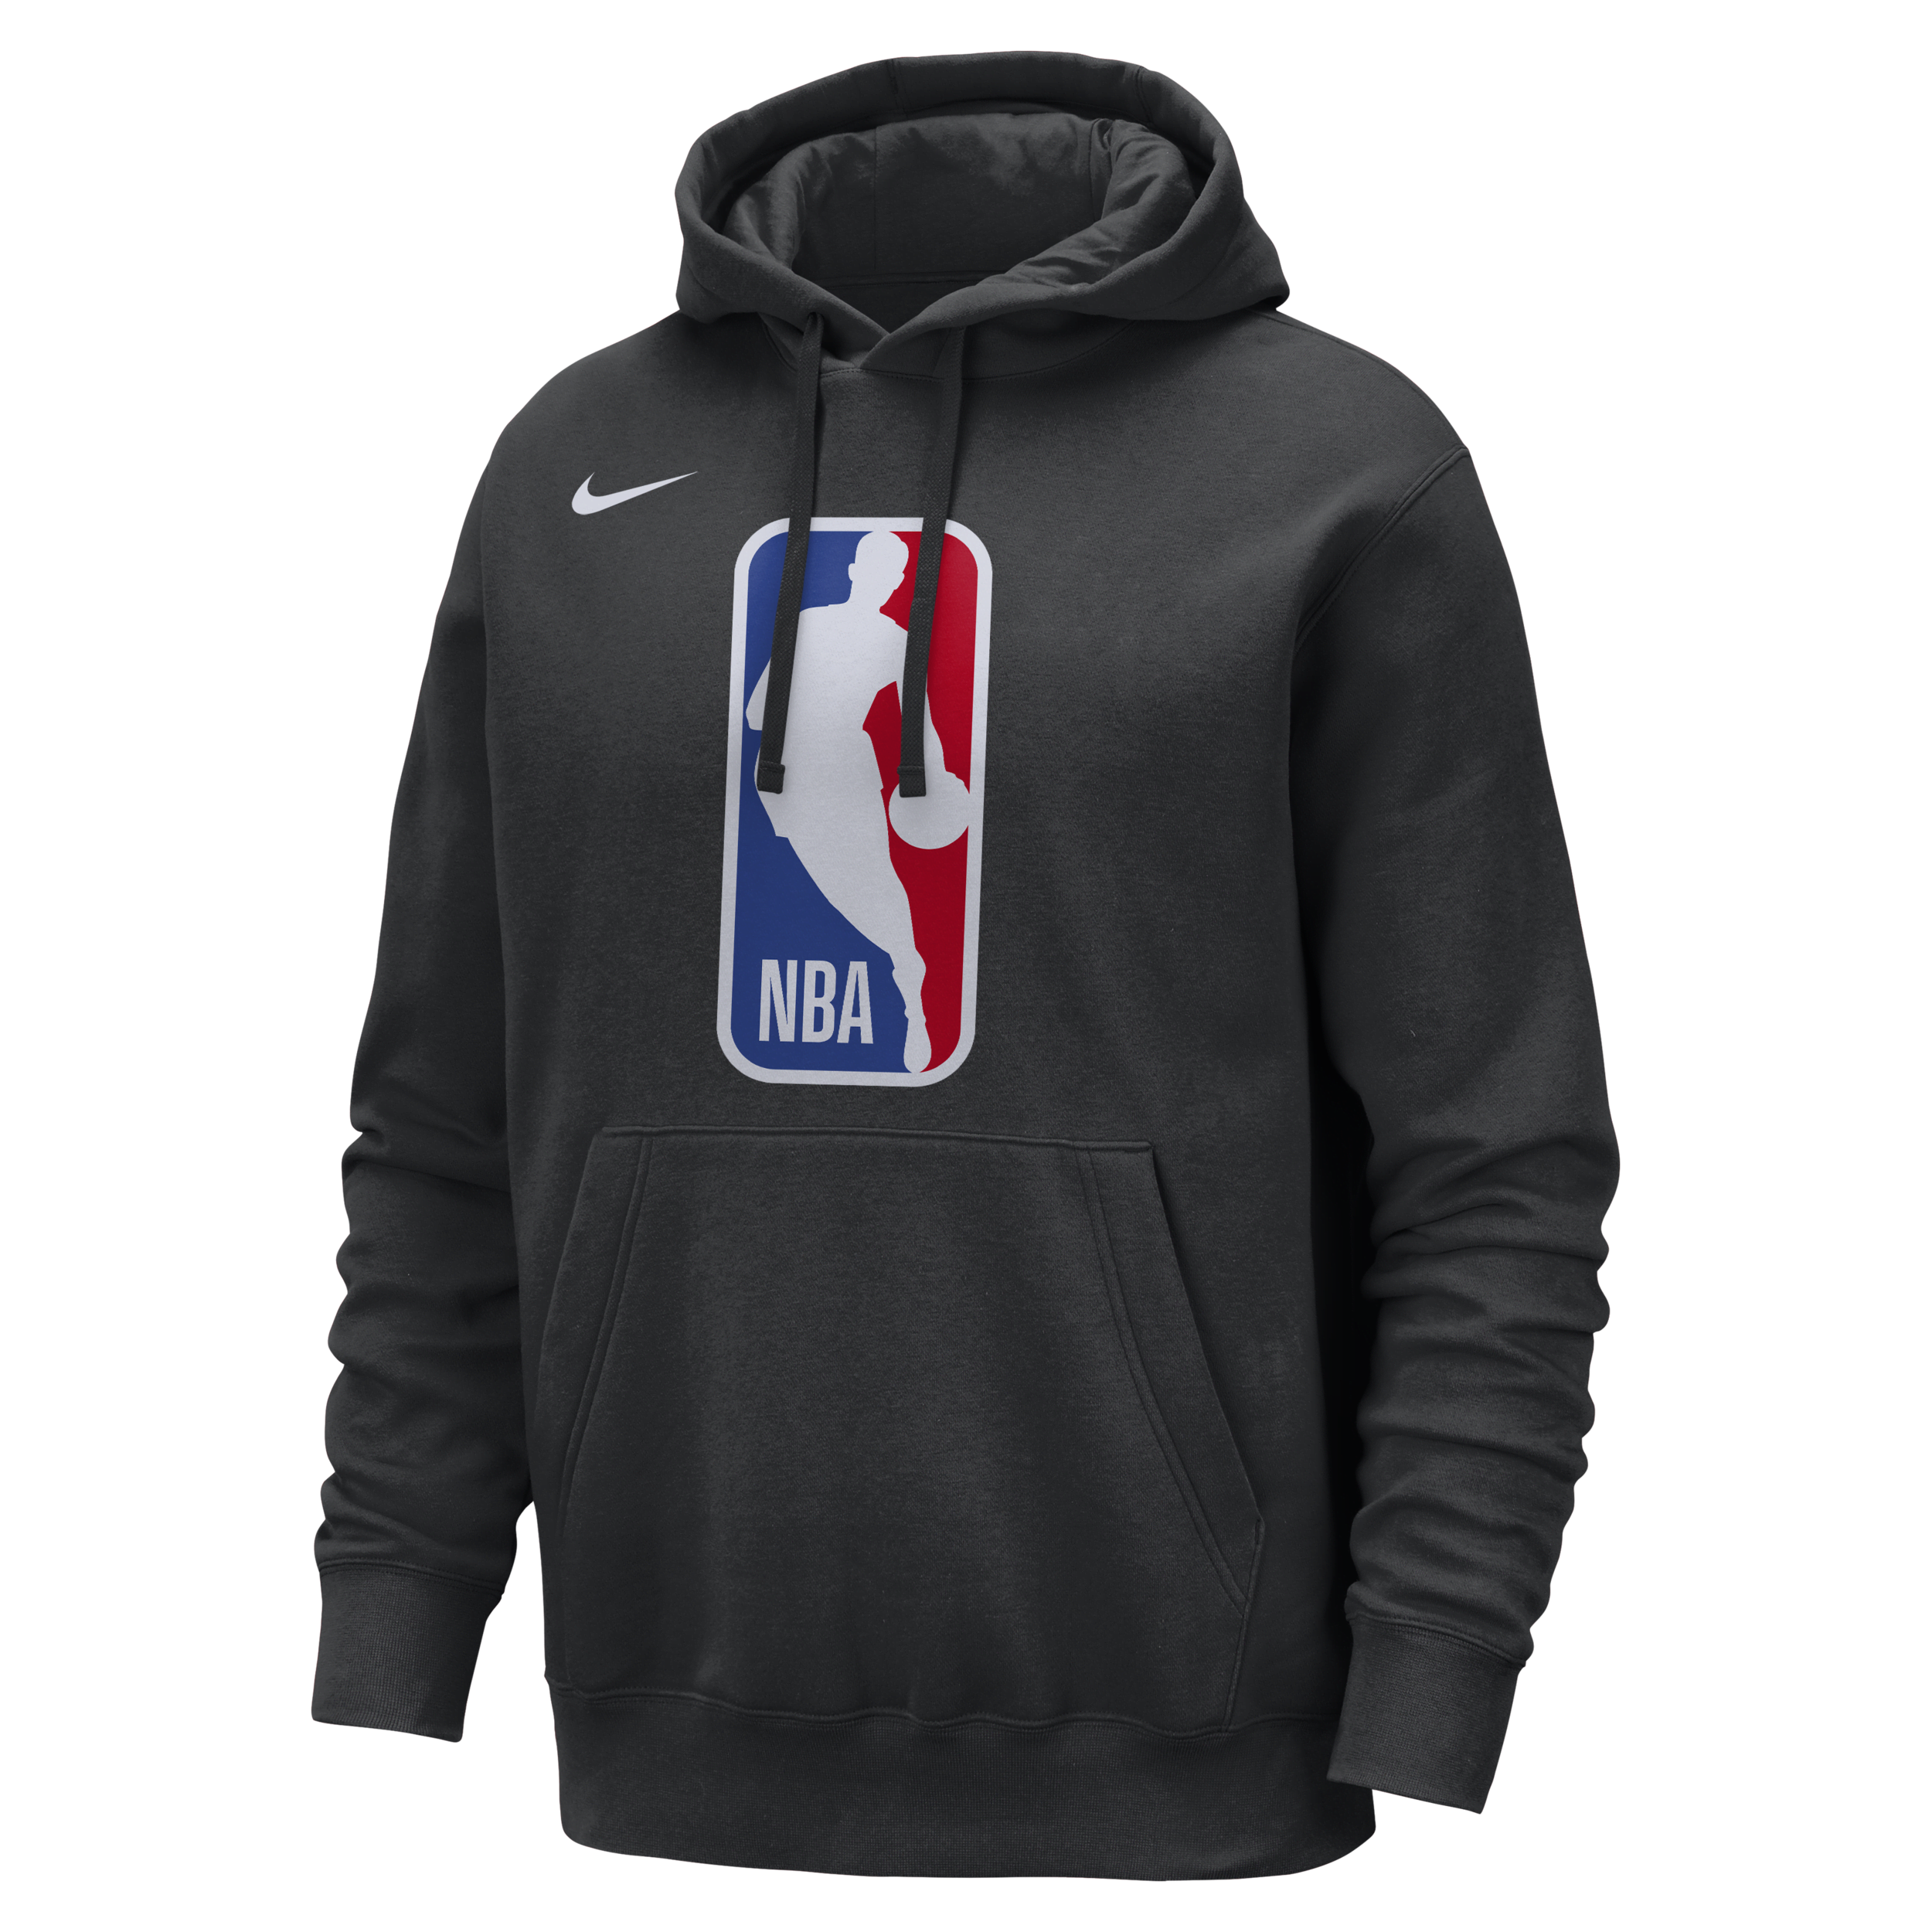 Team 31 Club Sudadera con capucha Nike de la NBA - Hombre - Negro